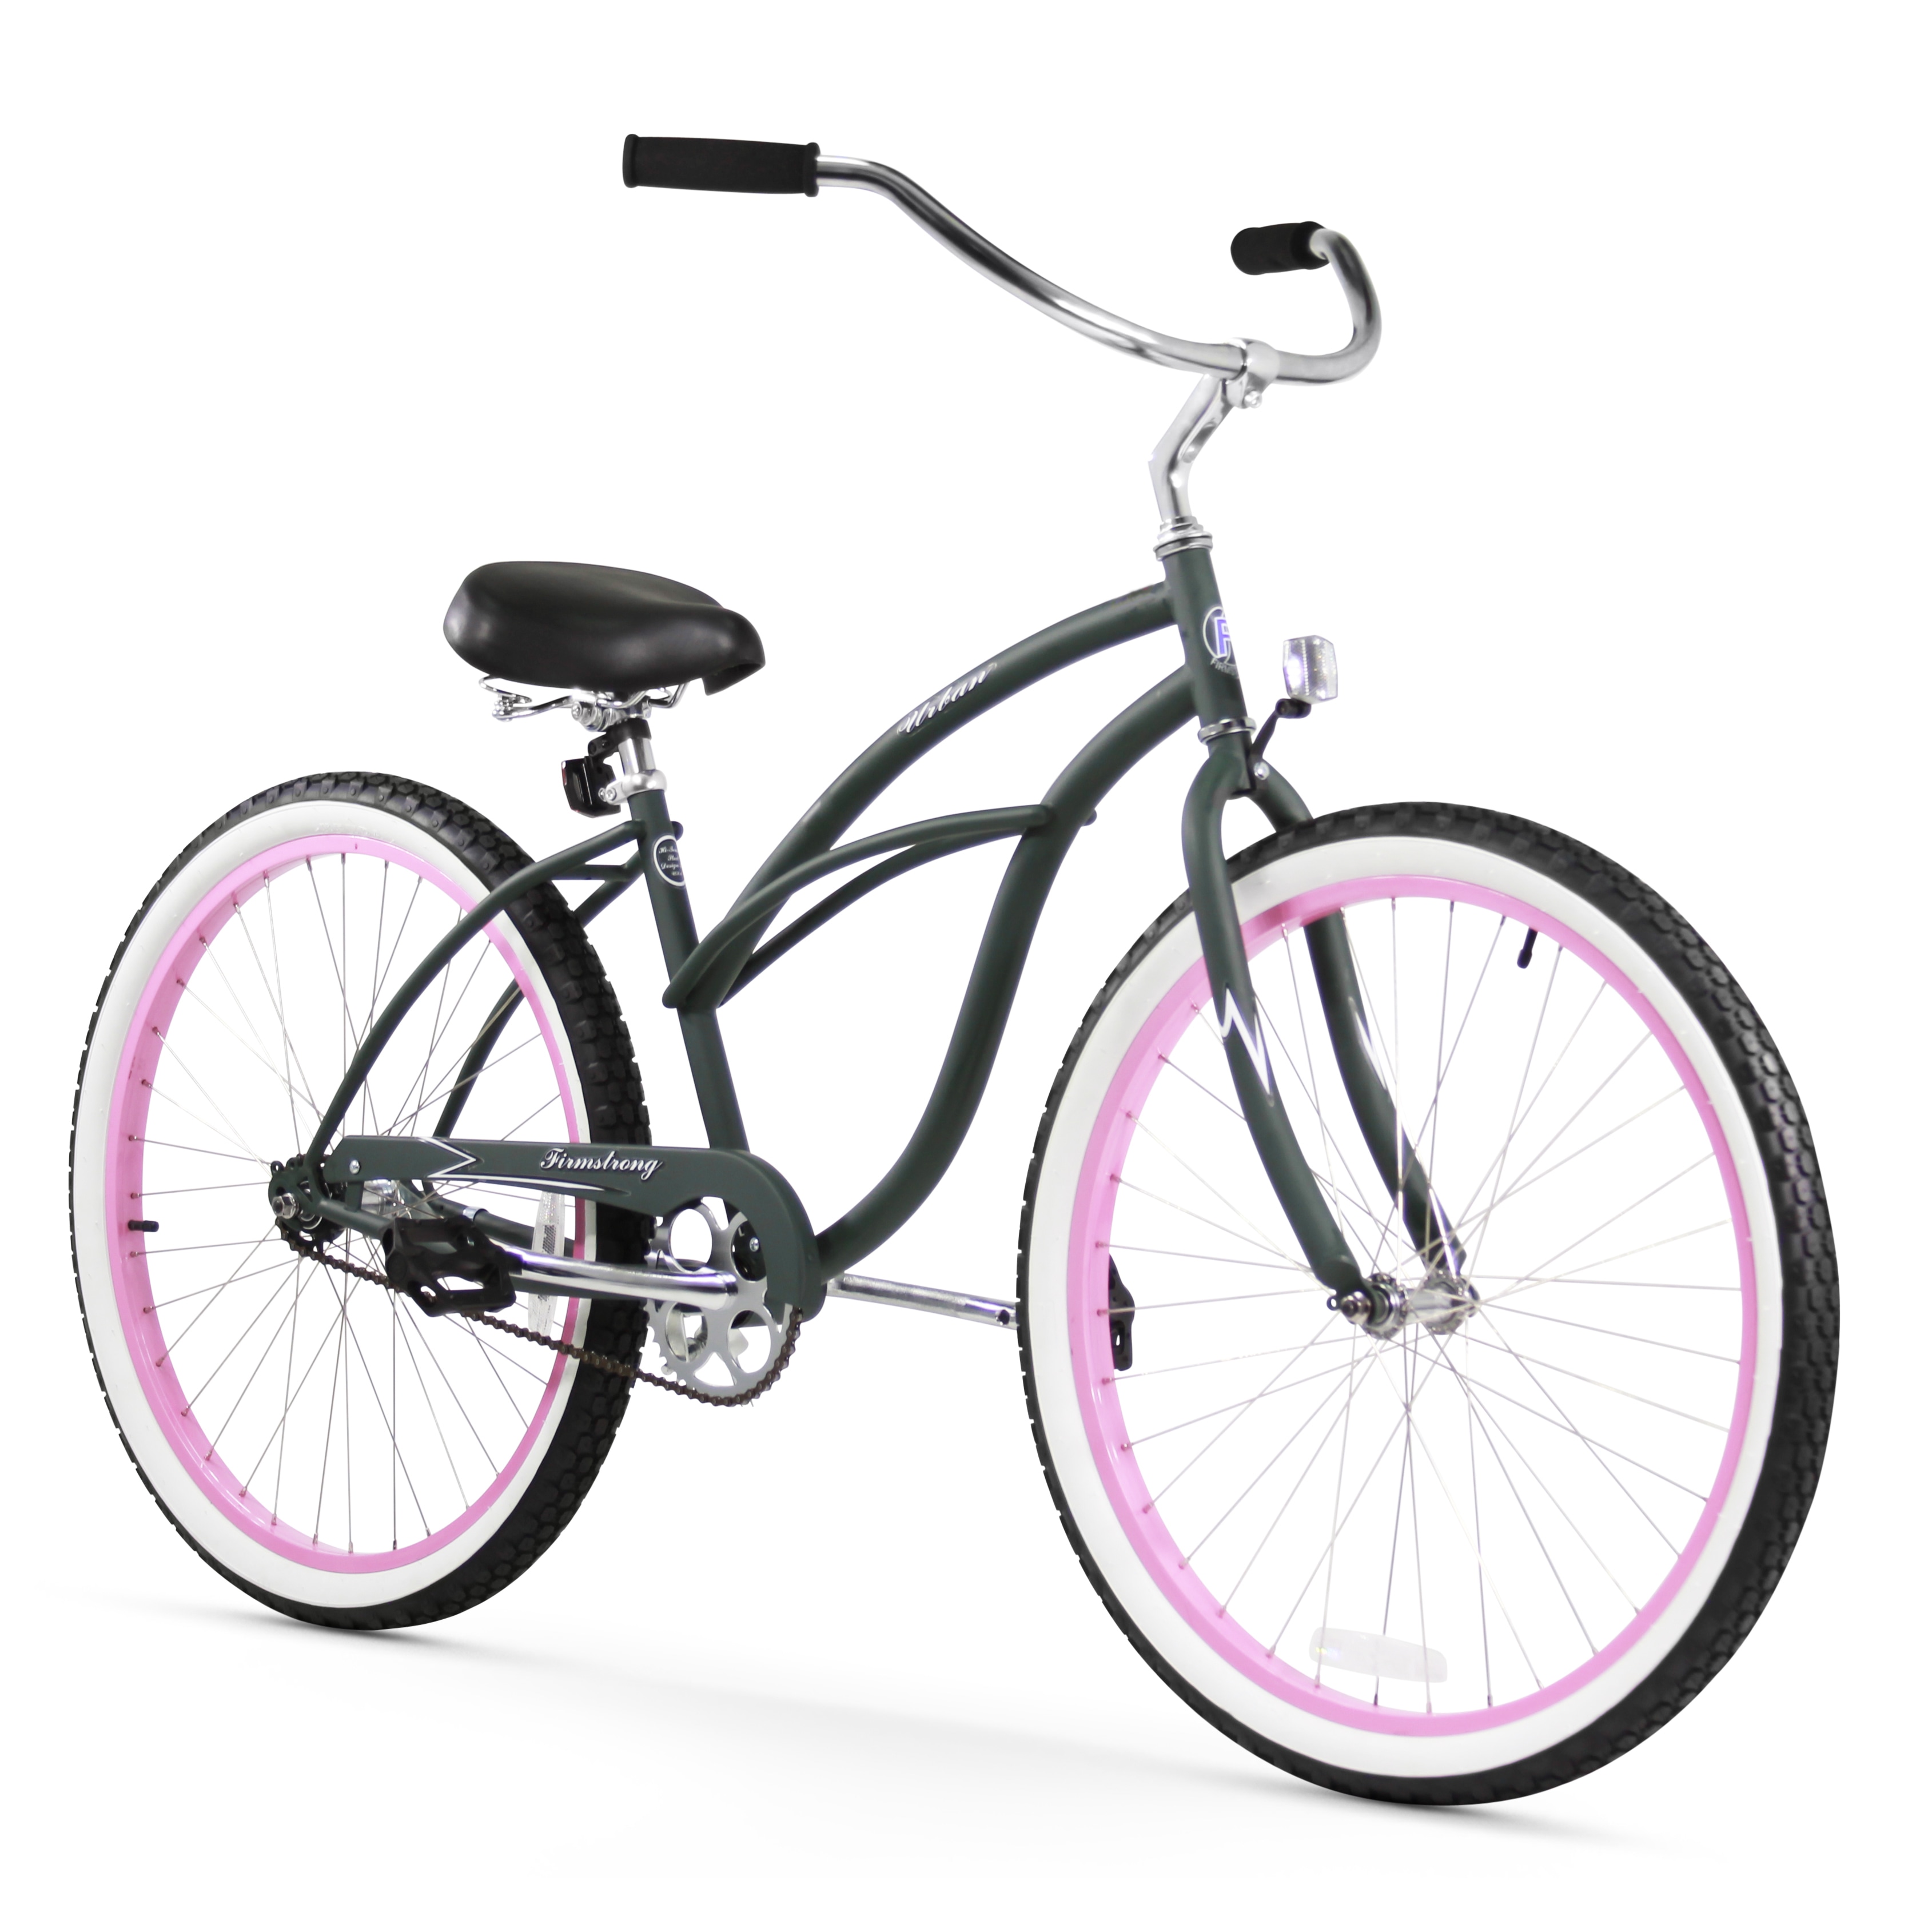 firmstrong urban lady beach cruiser bicycle